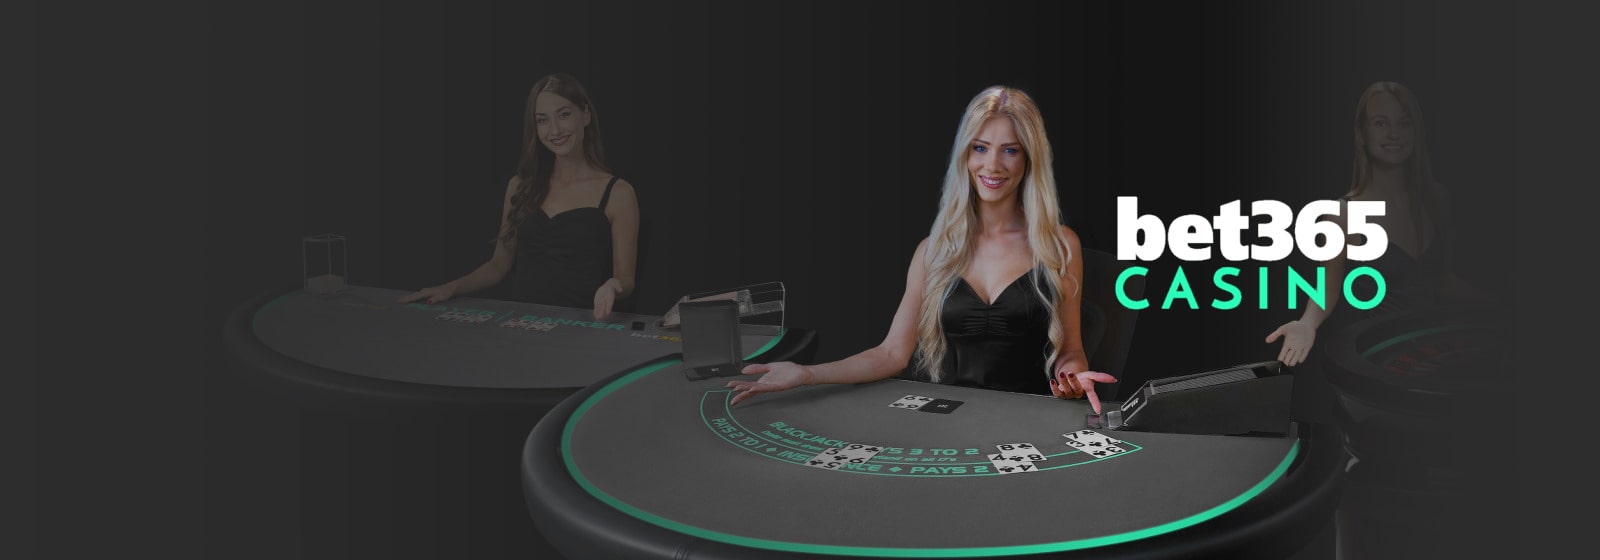 bet365 roulette casino site